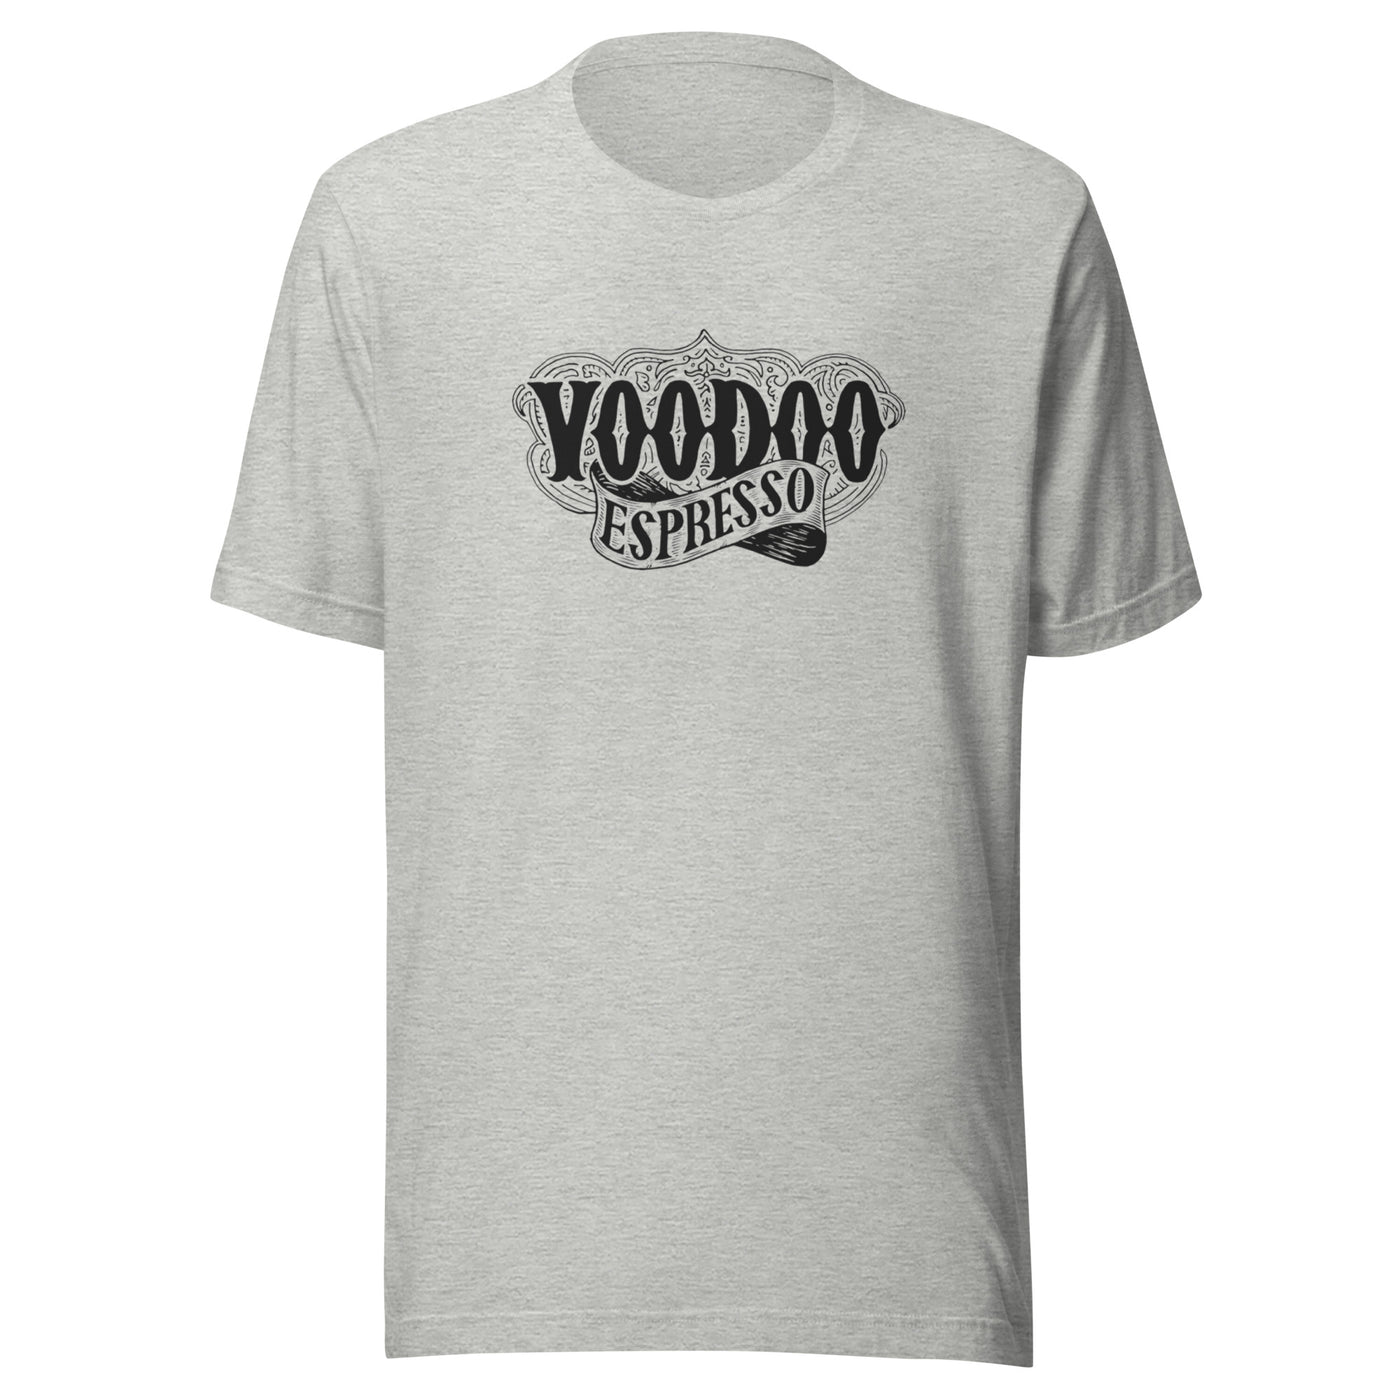 Unisex Voodoo Espresso t-shirt - VOODOO COFFEE COMPANY